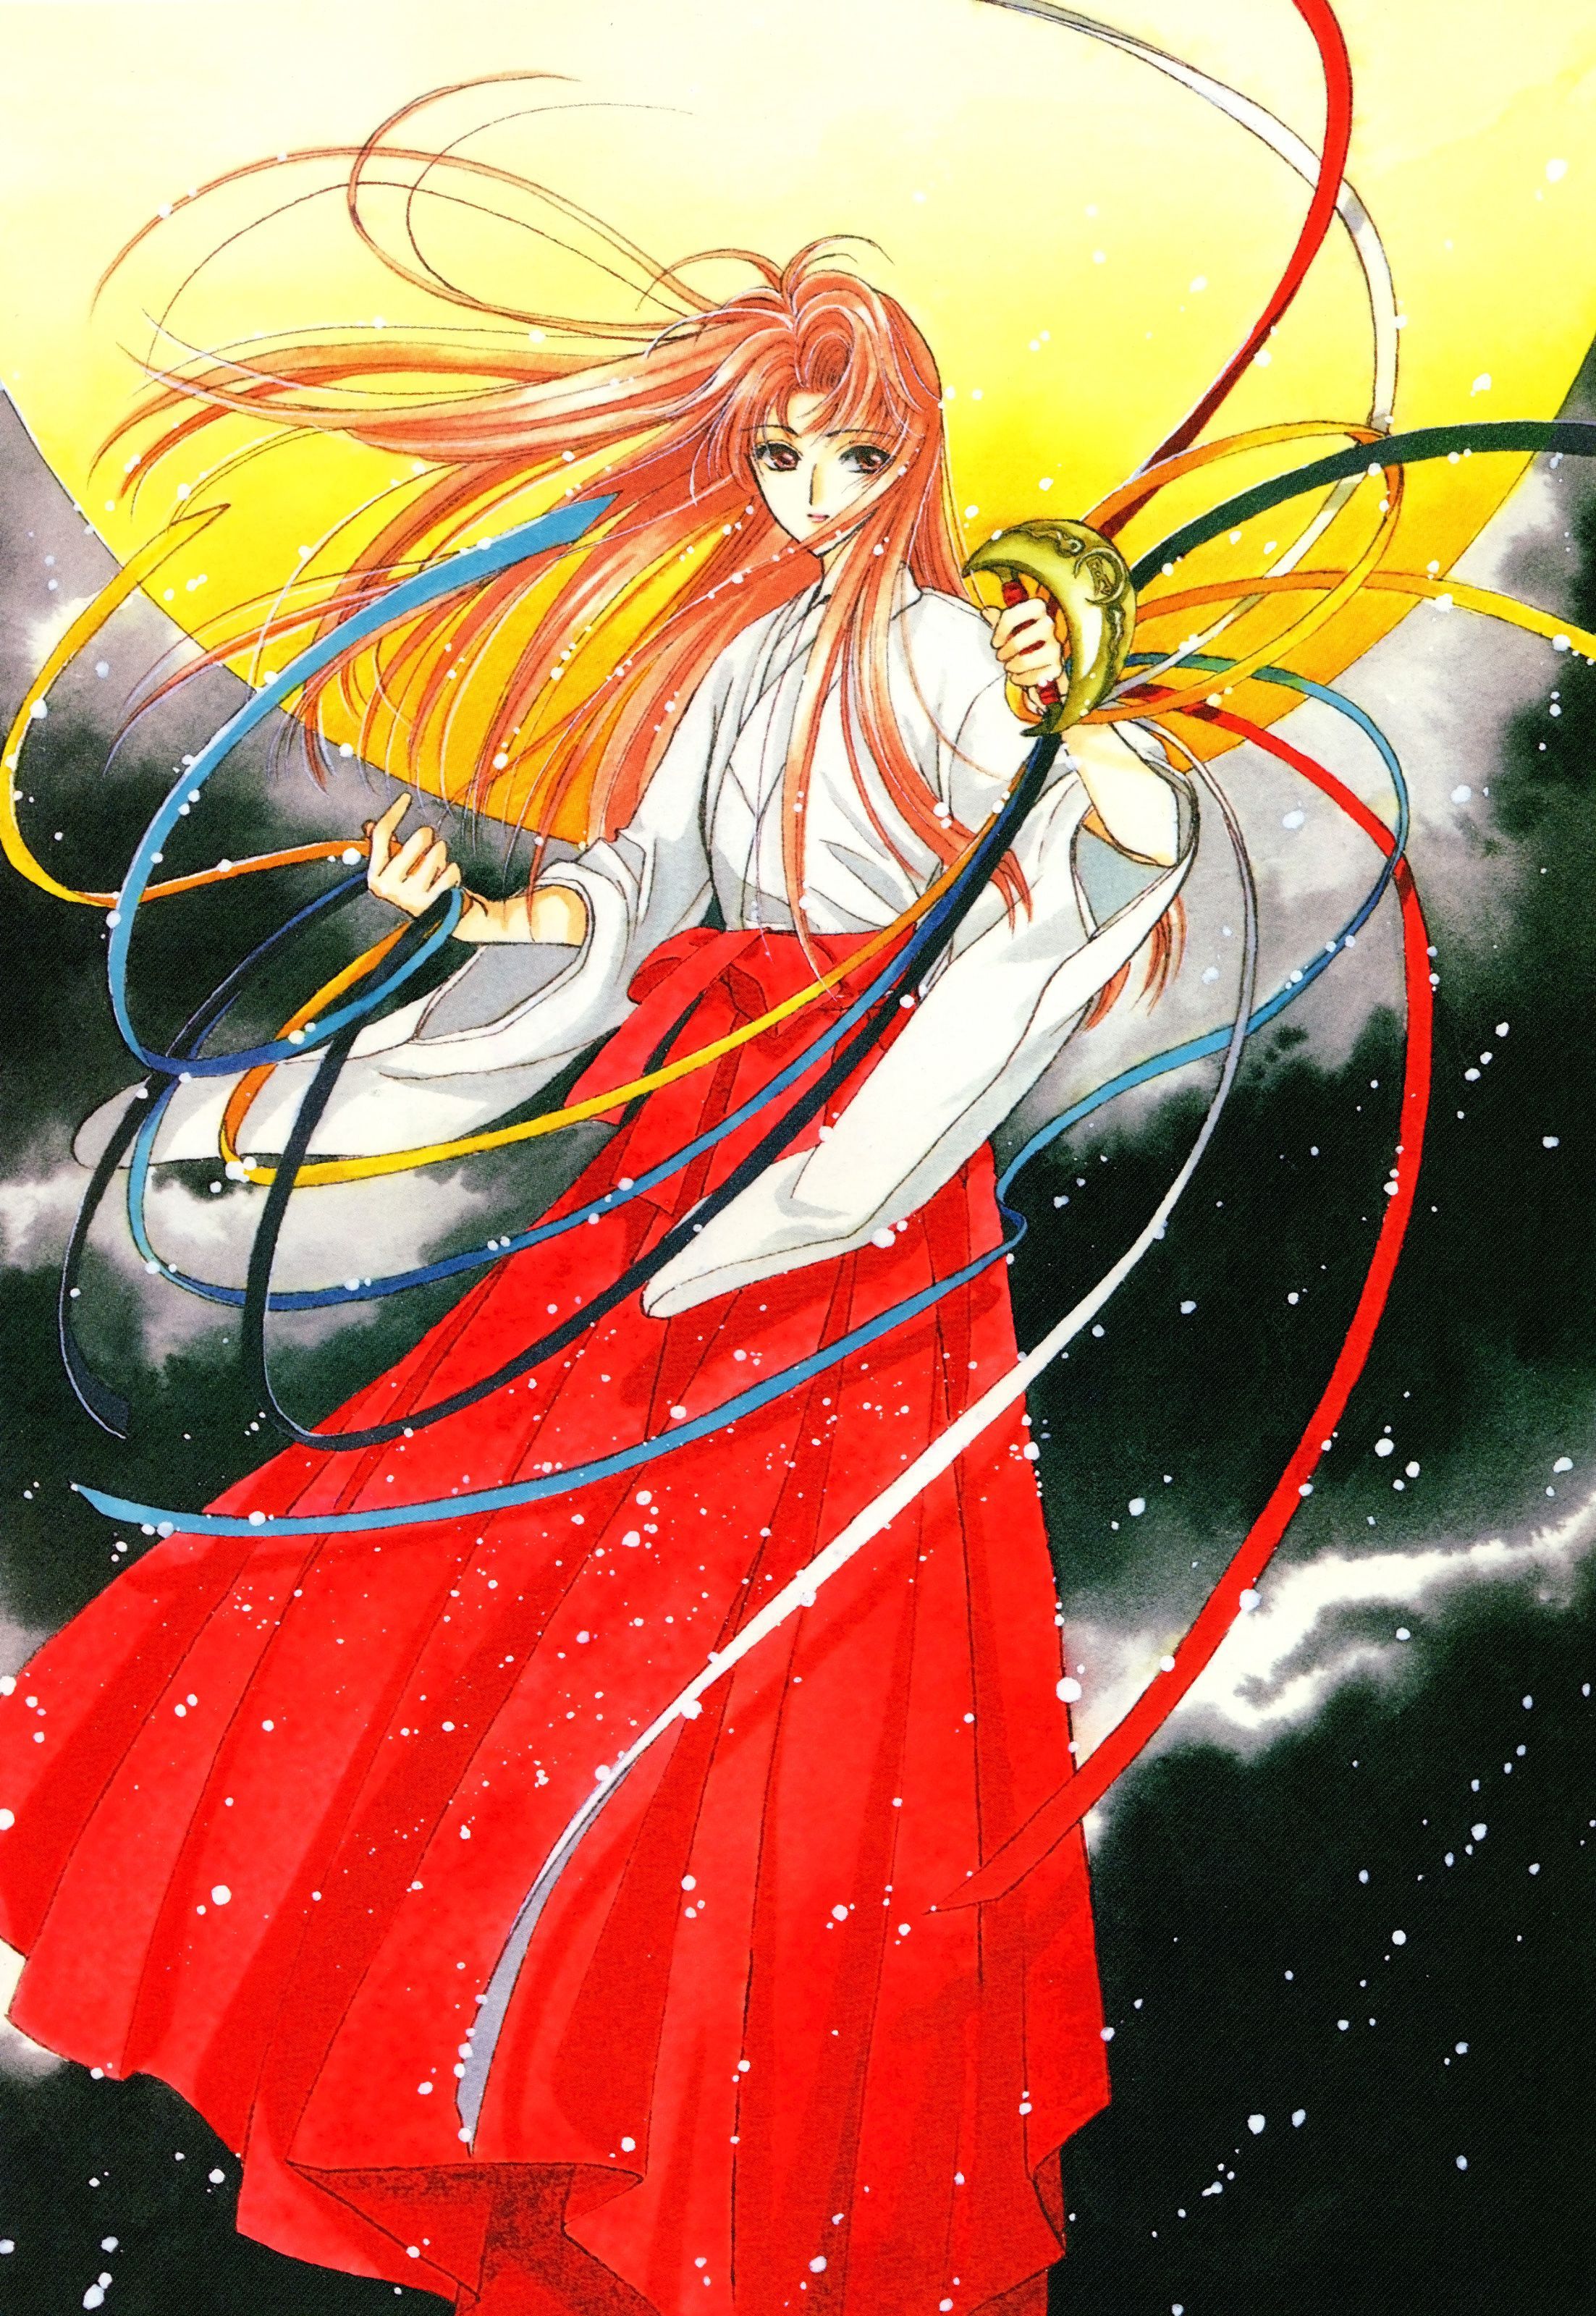 Kaho Wearing Priestess Attire In Cardcaptor Sakura Illustration By Clamp